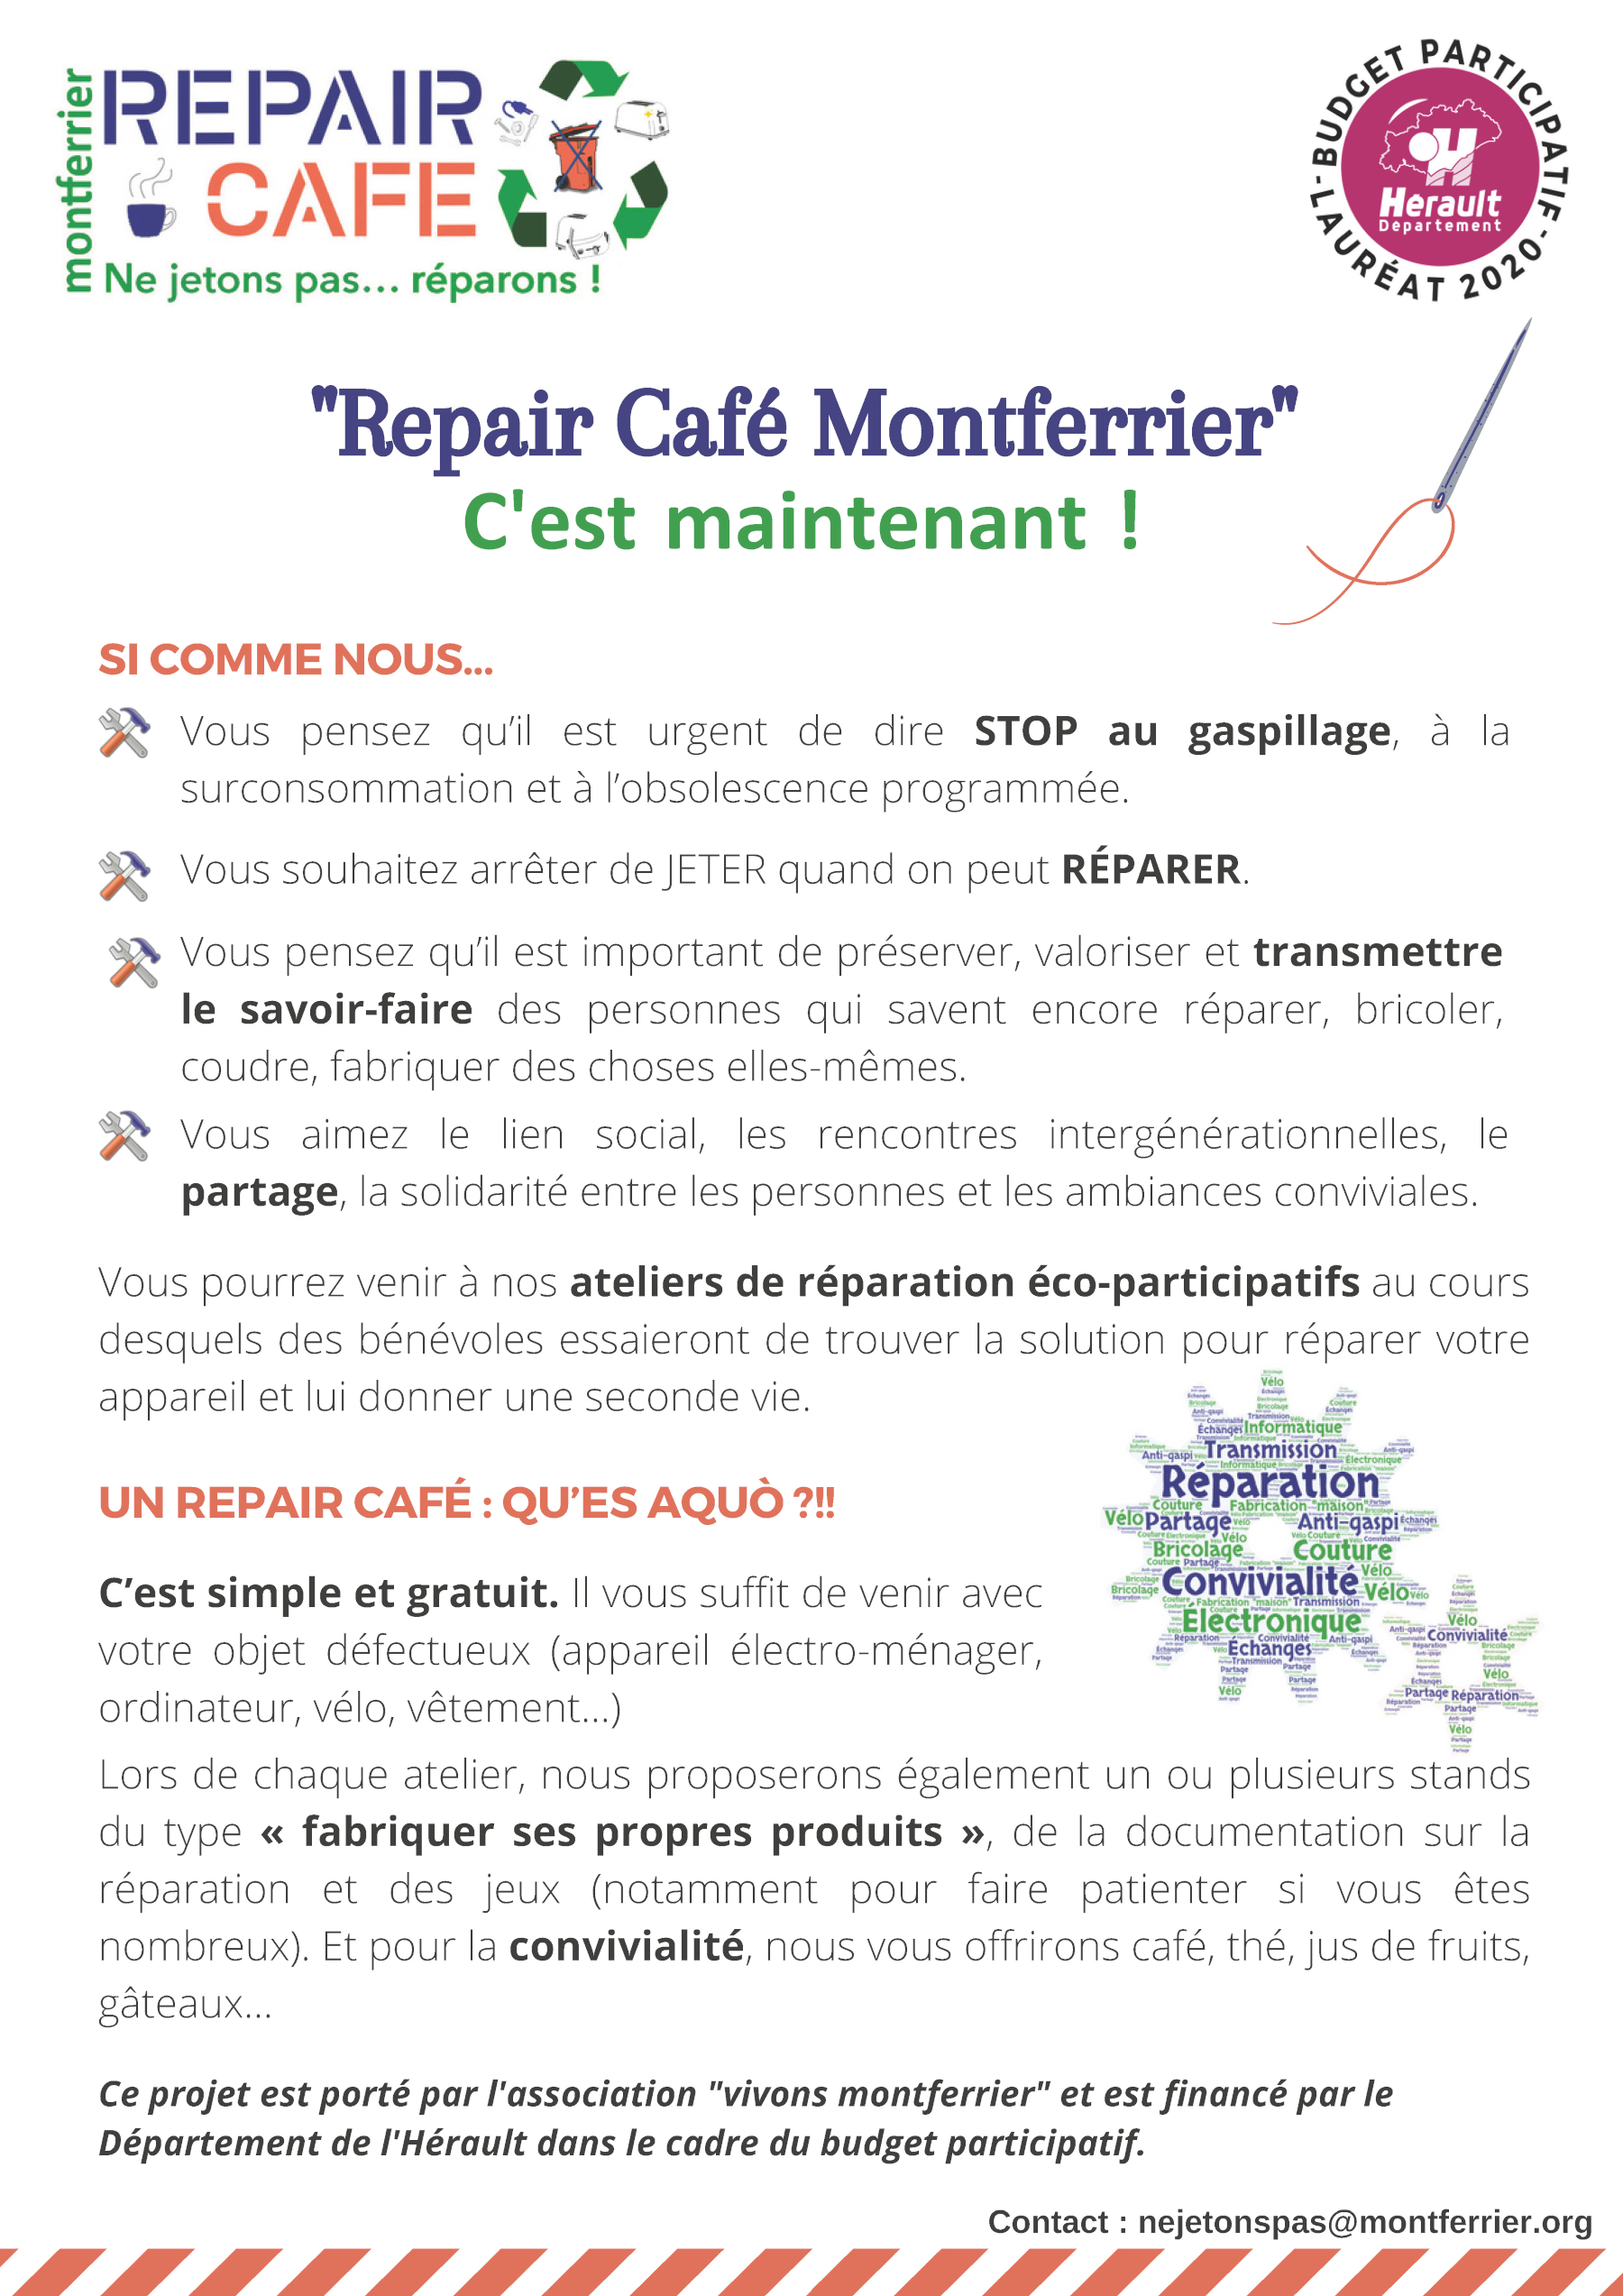 Repair Café Montferrier